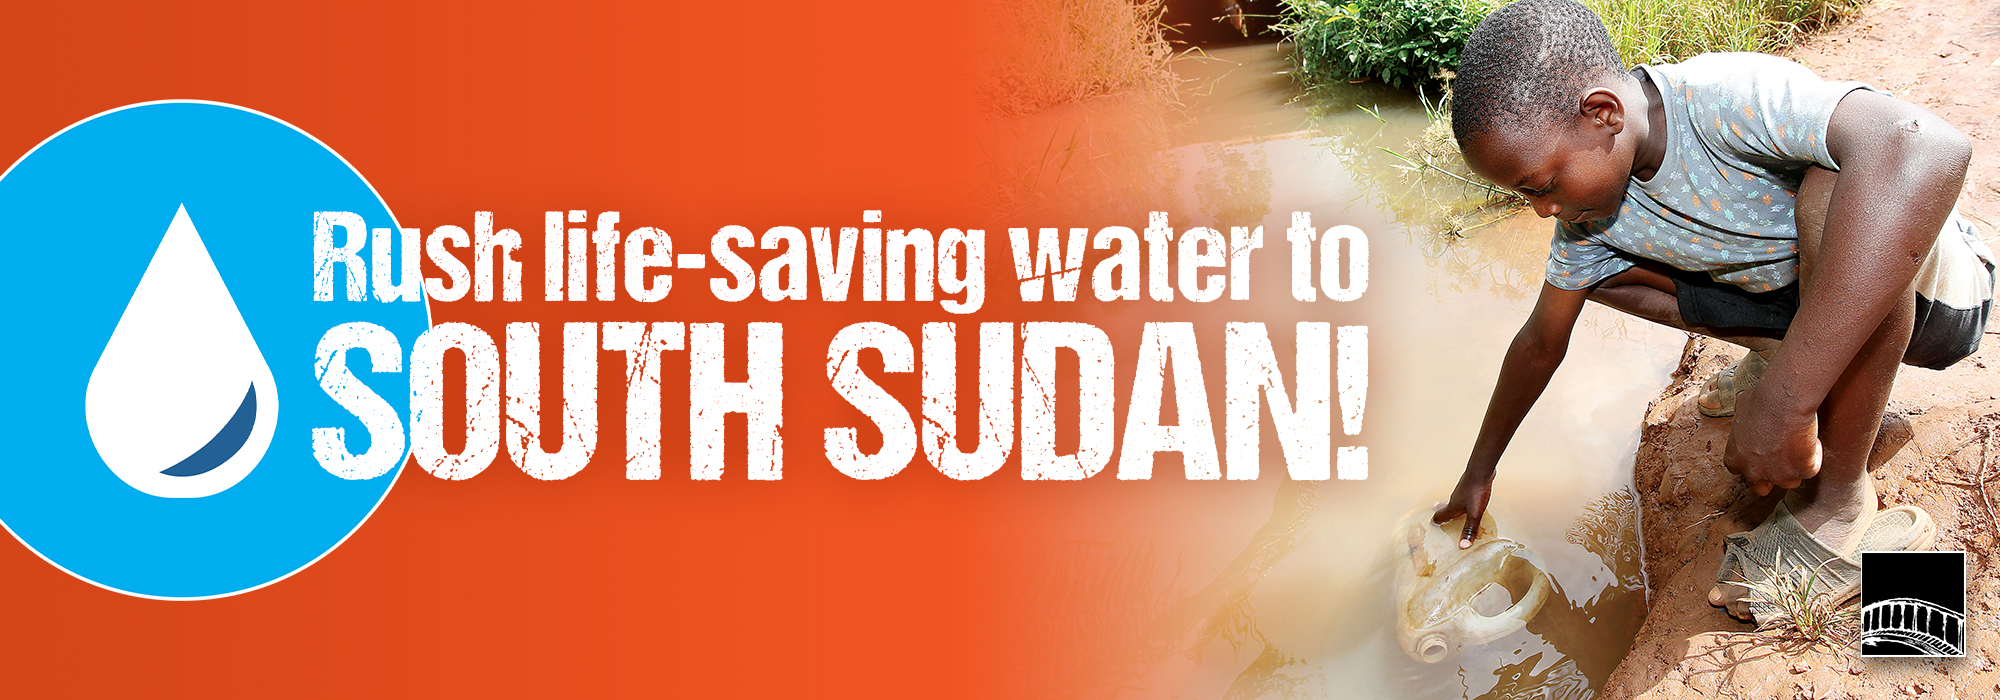 Rush life-saving water to South Sudan!